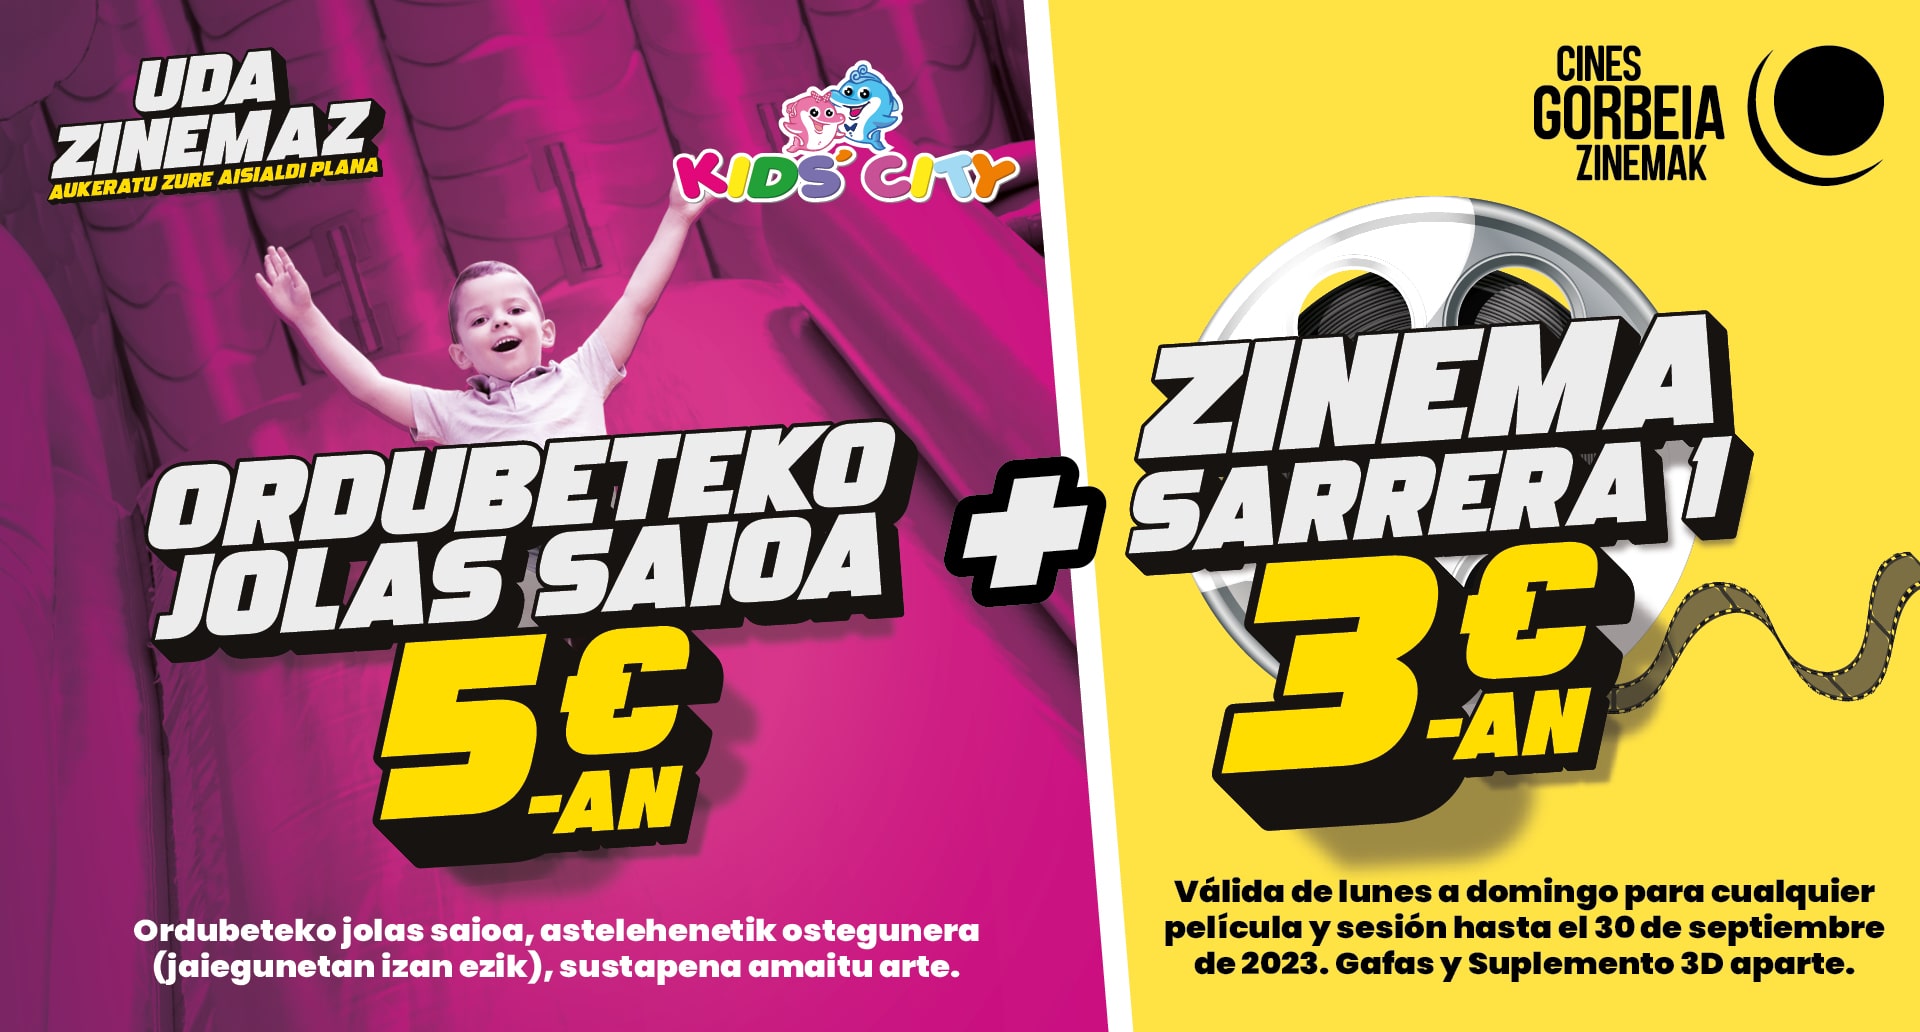 Uda zinemaz - Kids City